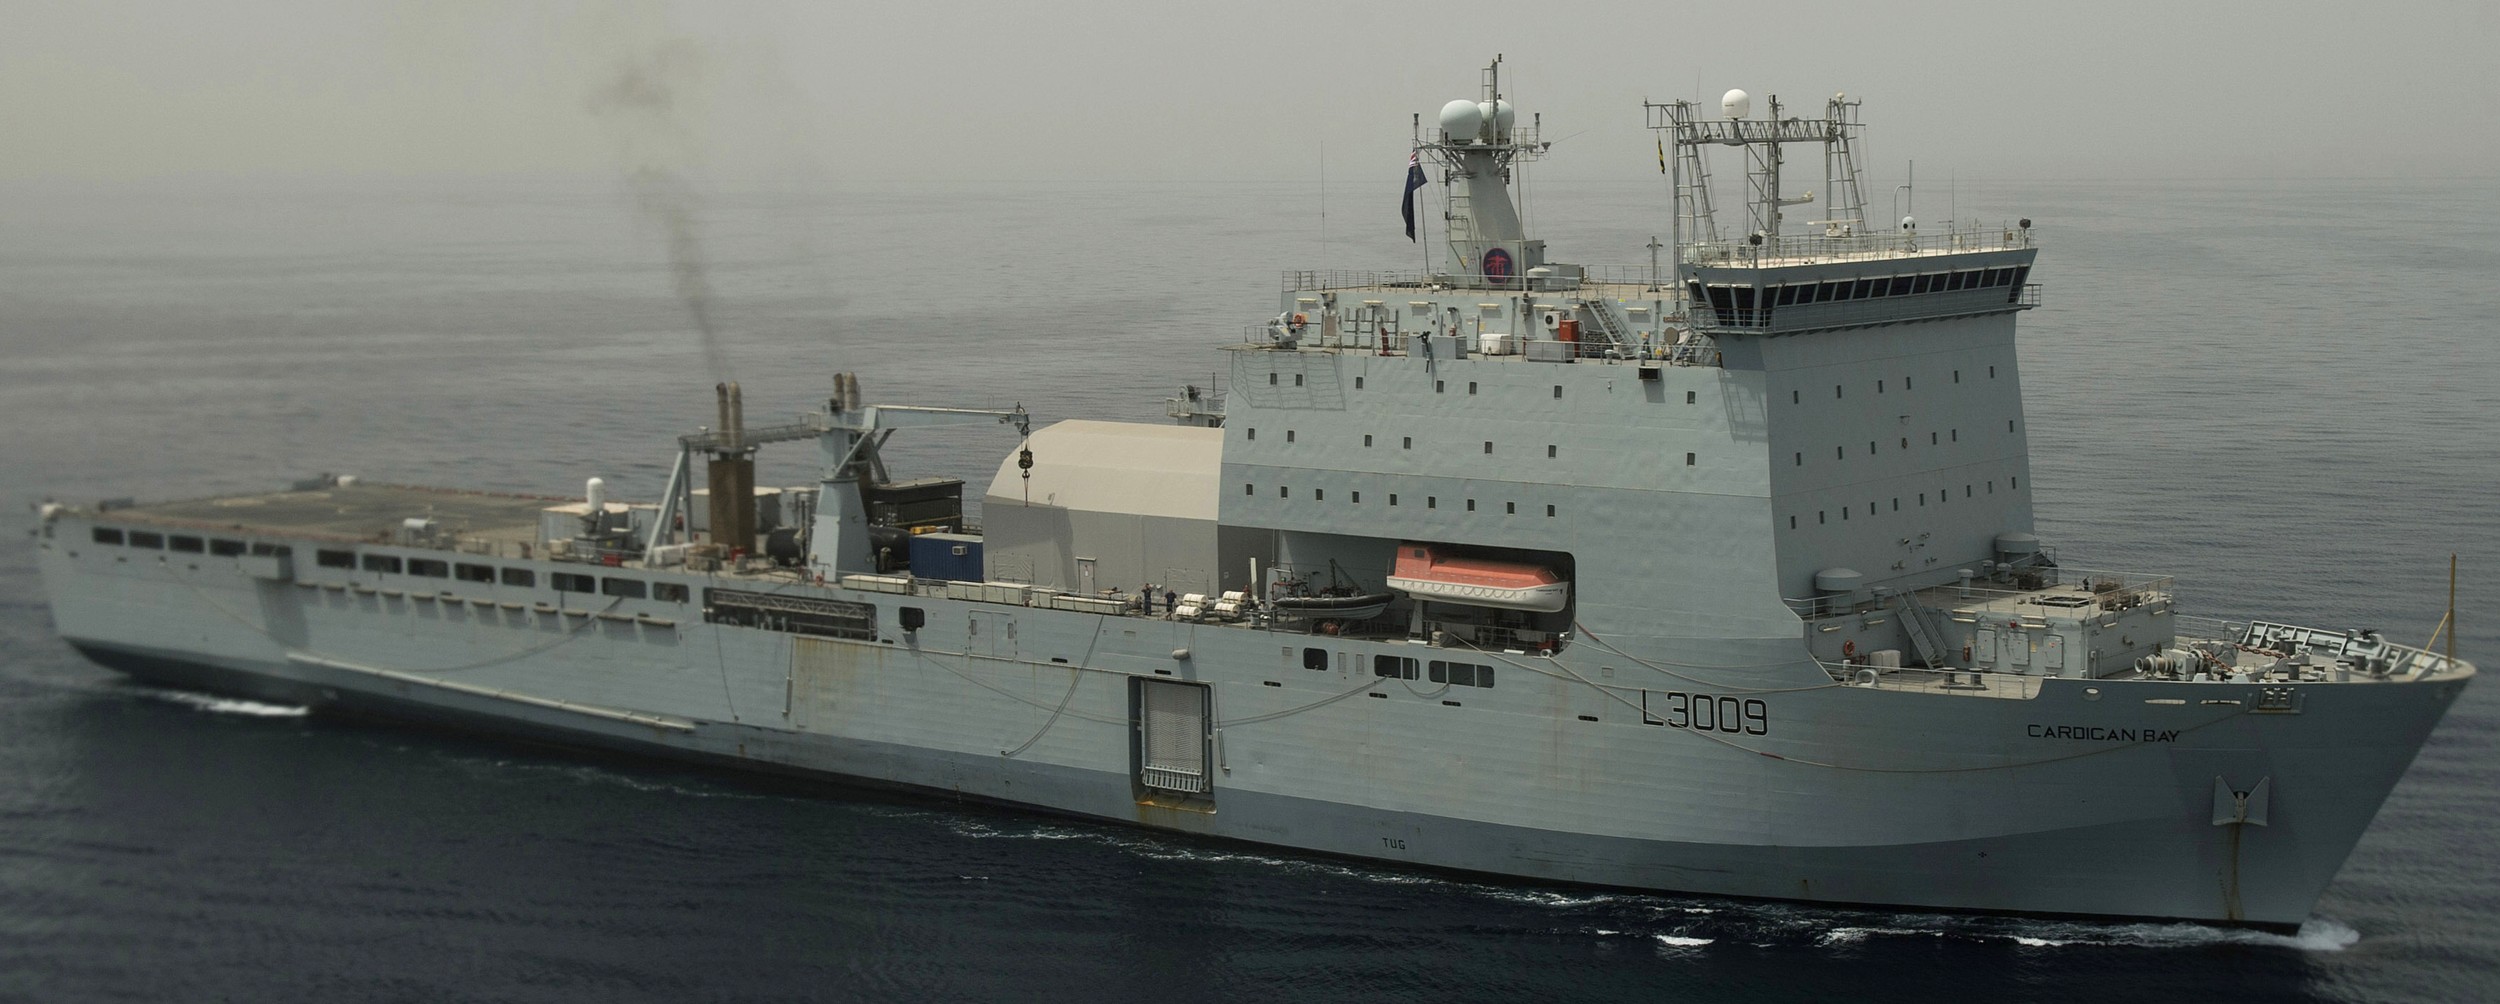 l-3009 rfa cardigan bay dock landing ship lsd royal fleet auxilary navy 10